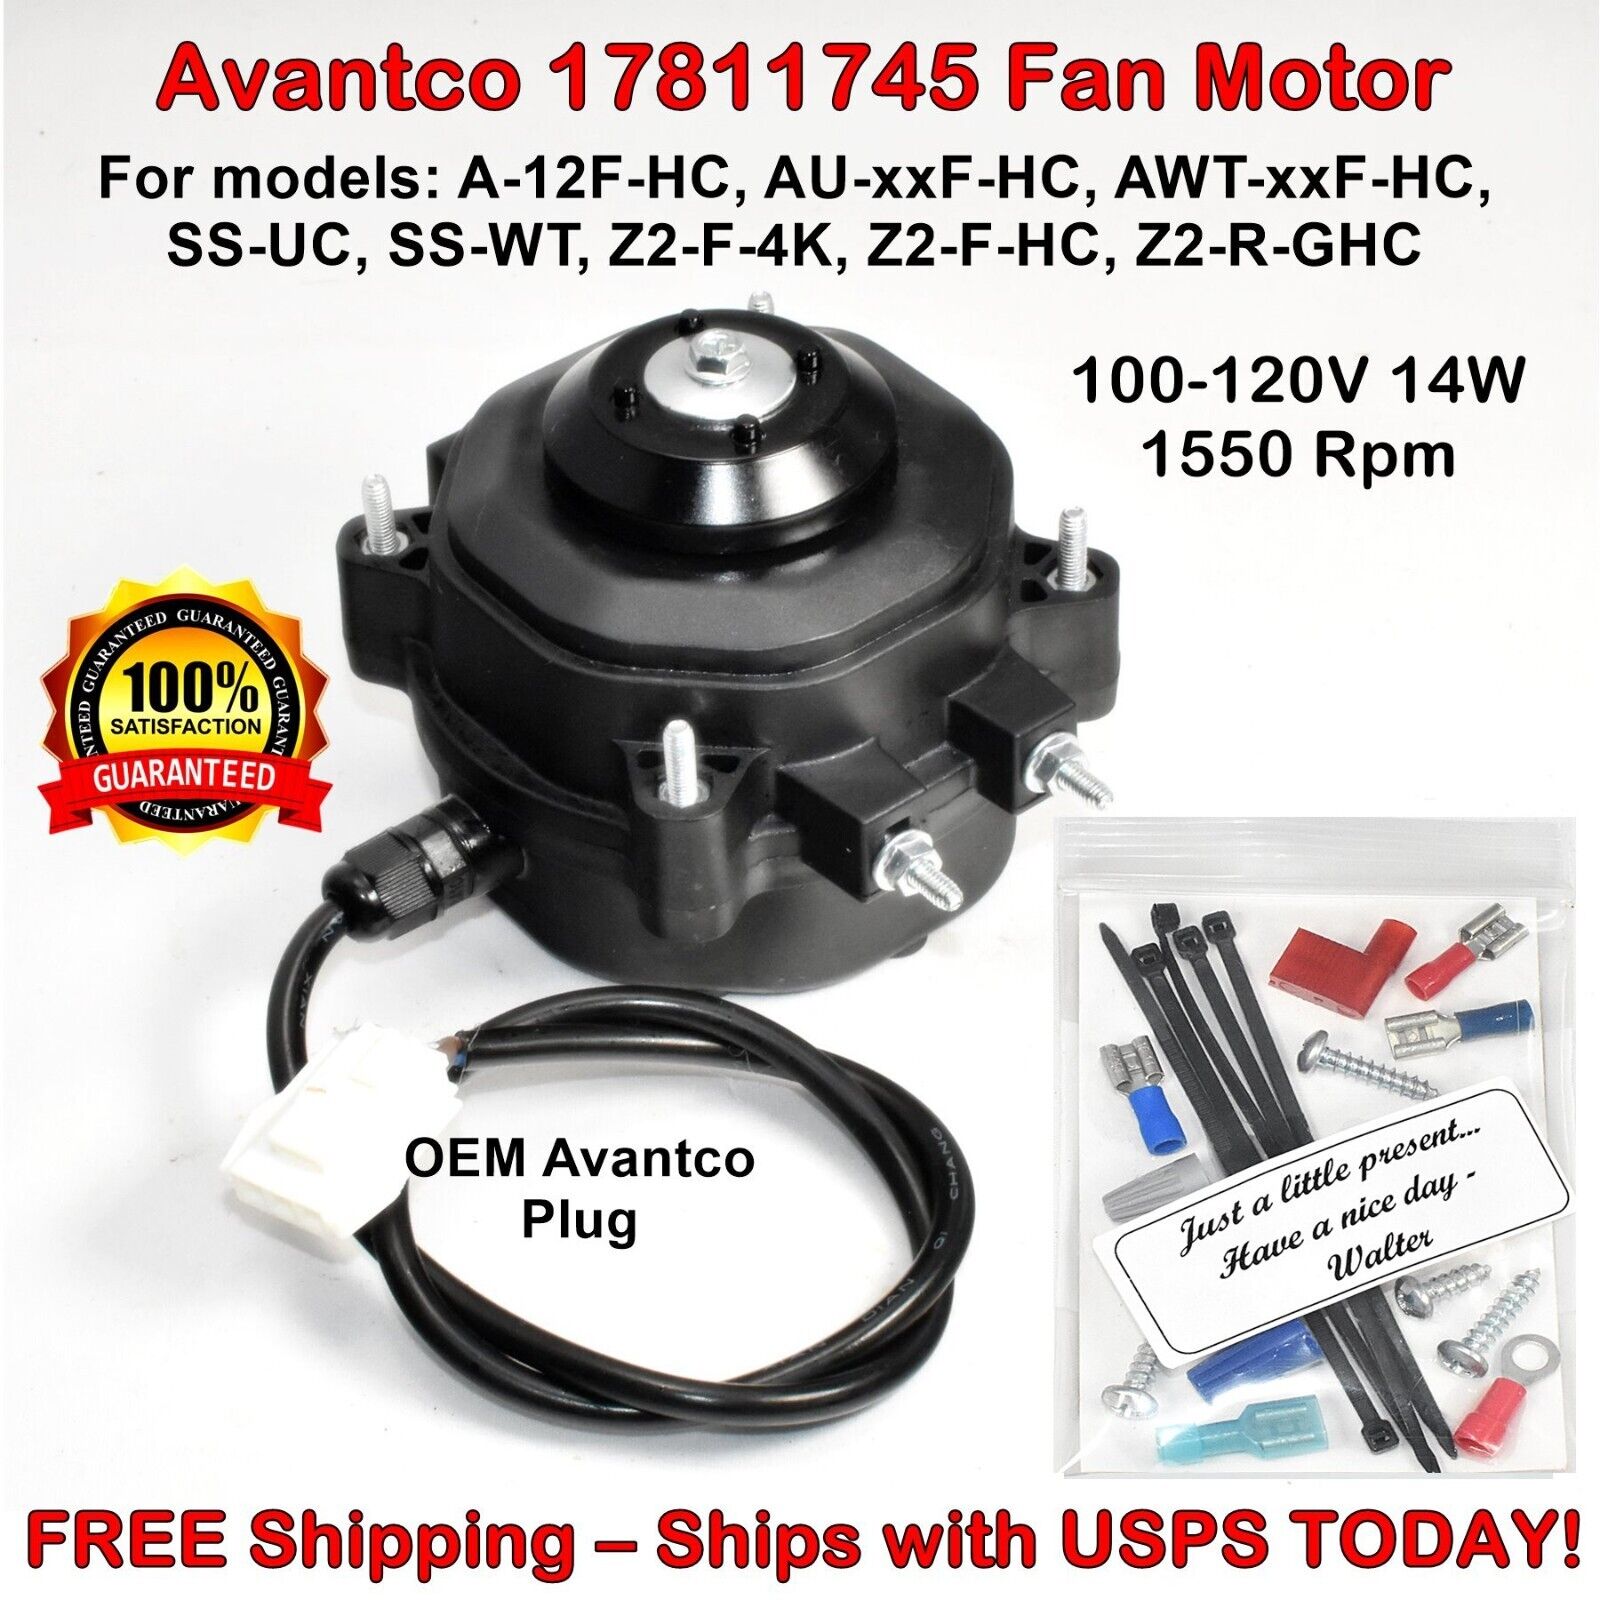 Avantco 17811745 Condenser Fan Motor 115V, A-12F / Z2 Series, Ships Free Today